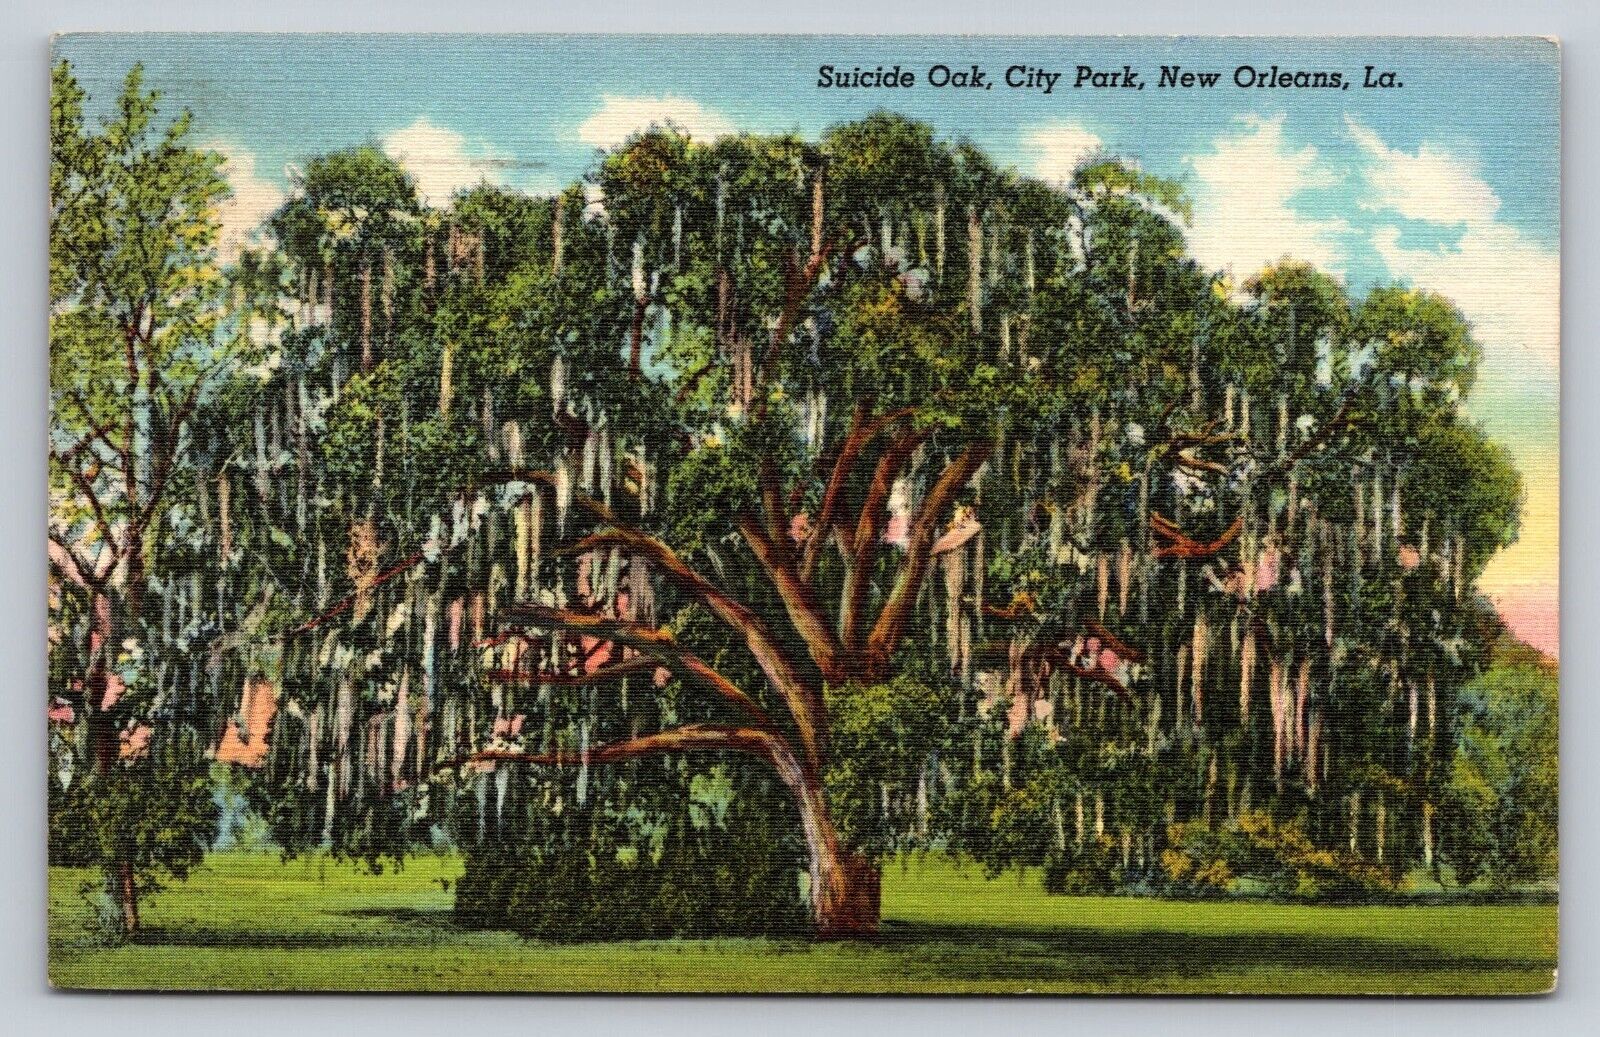 Suicide Oak City Park New Orleans LA Ghostly Hangings Tree 1947 Linen Postcard